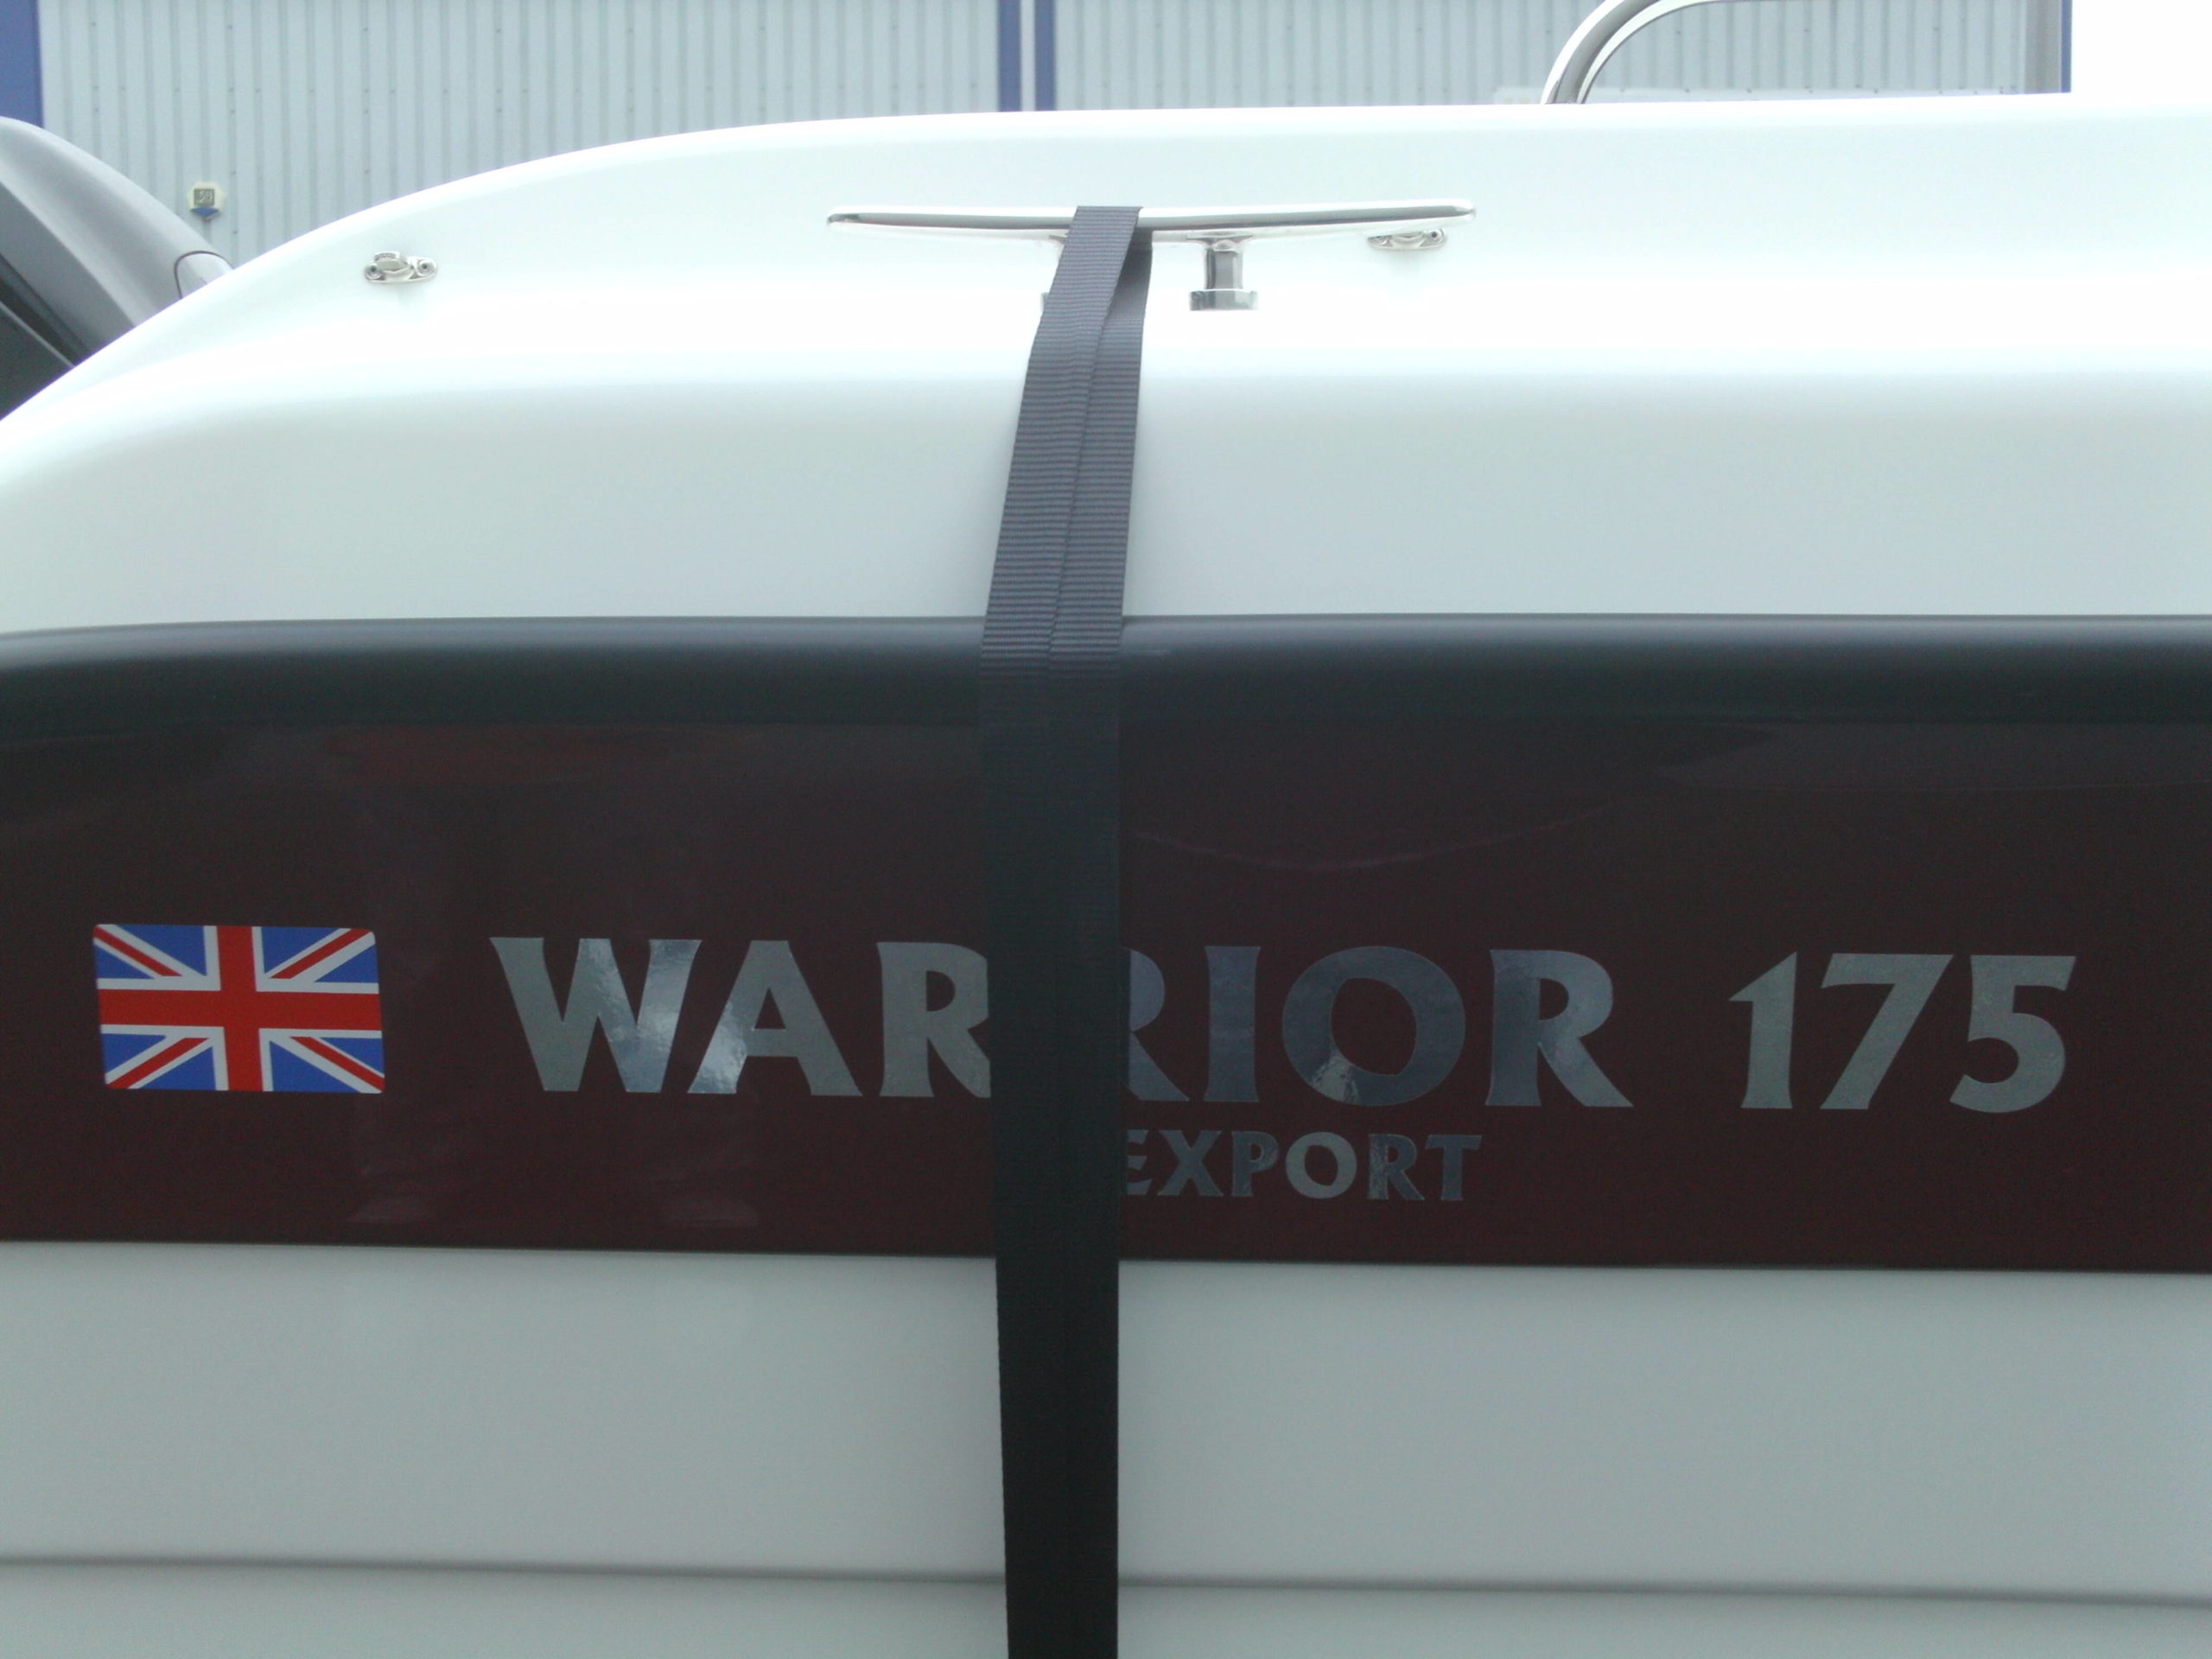 Warrior 175 Export Rear Decal